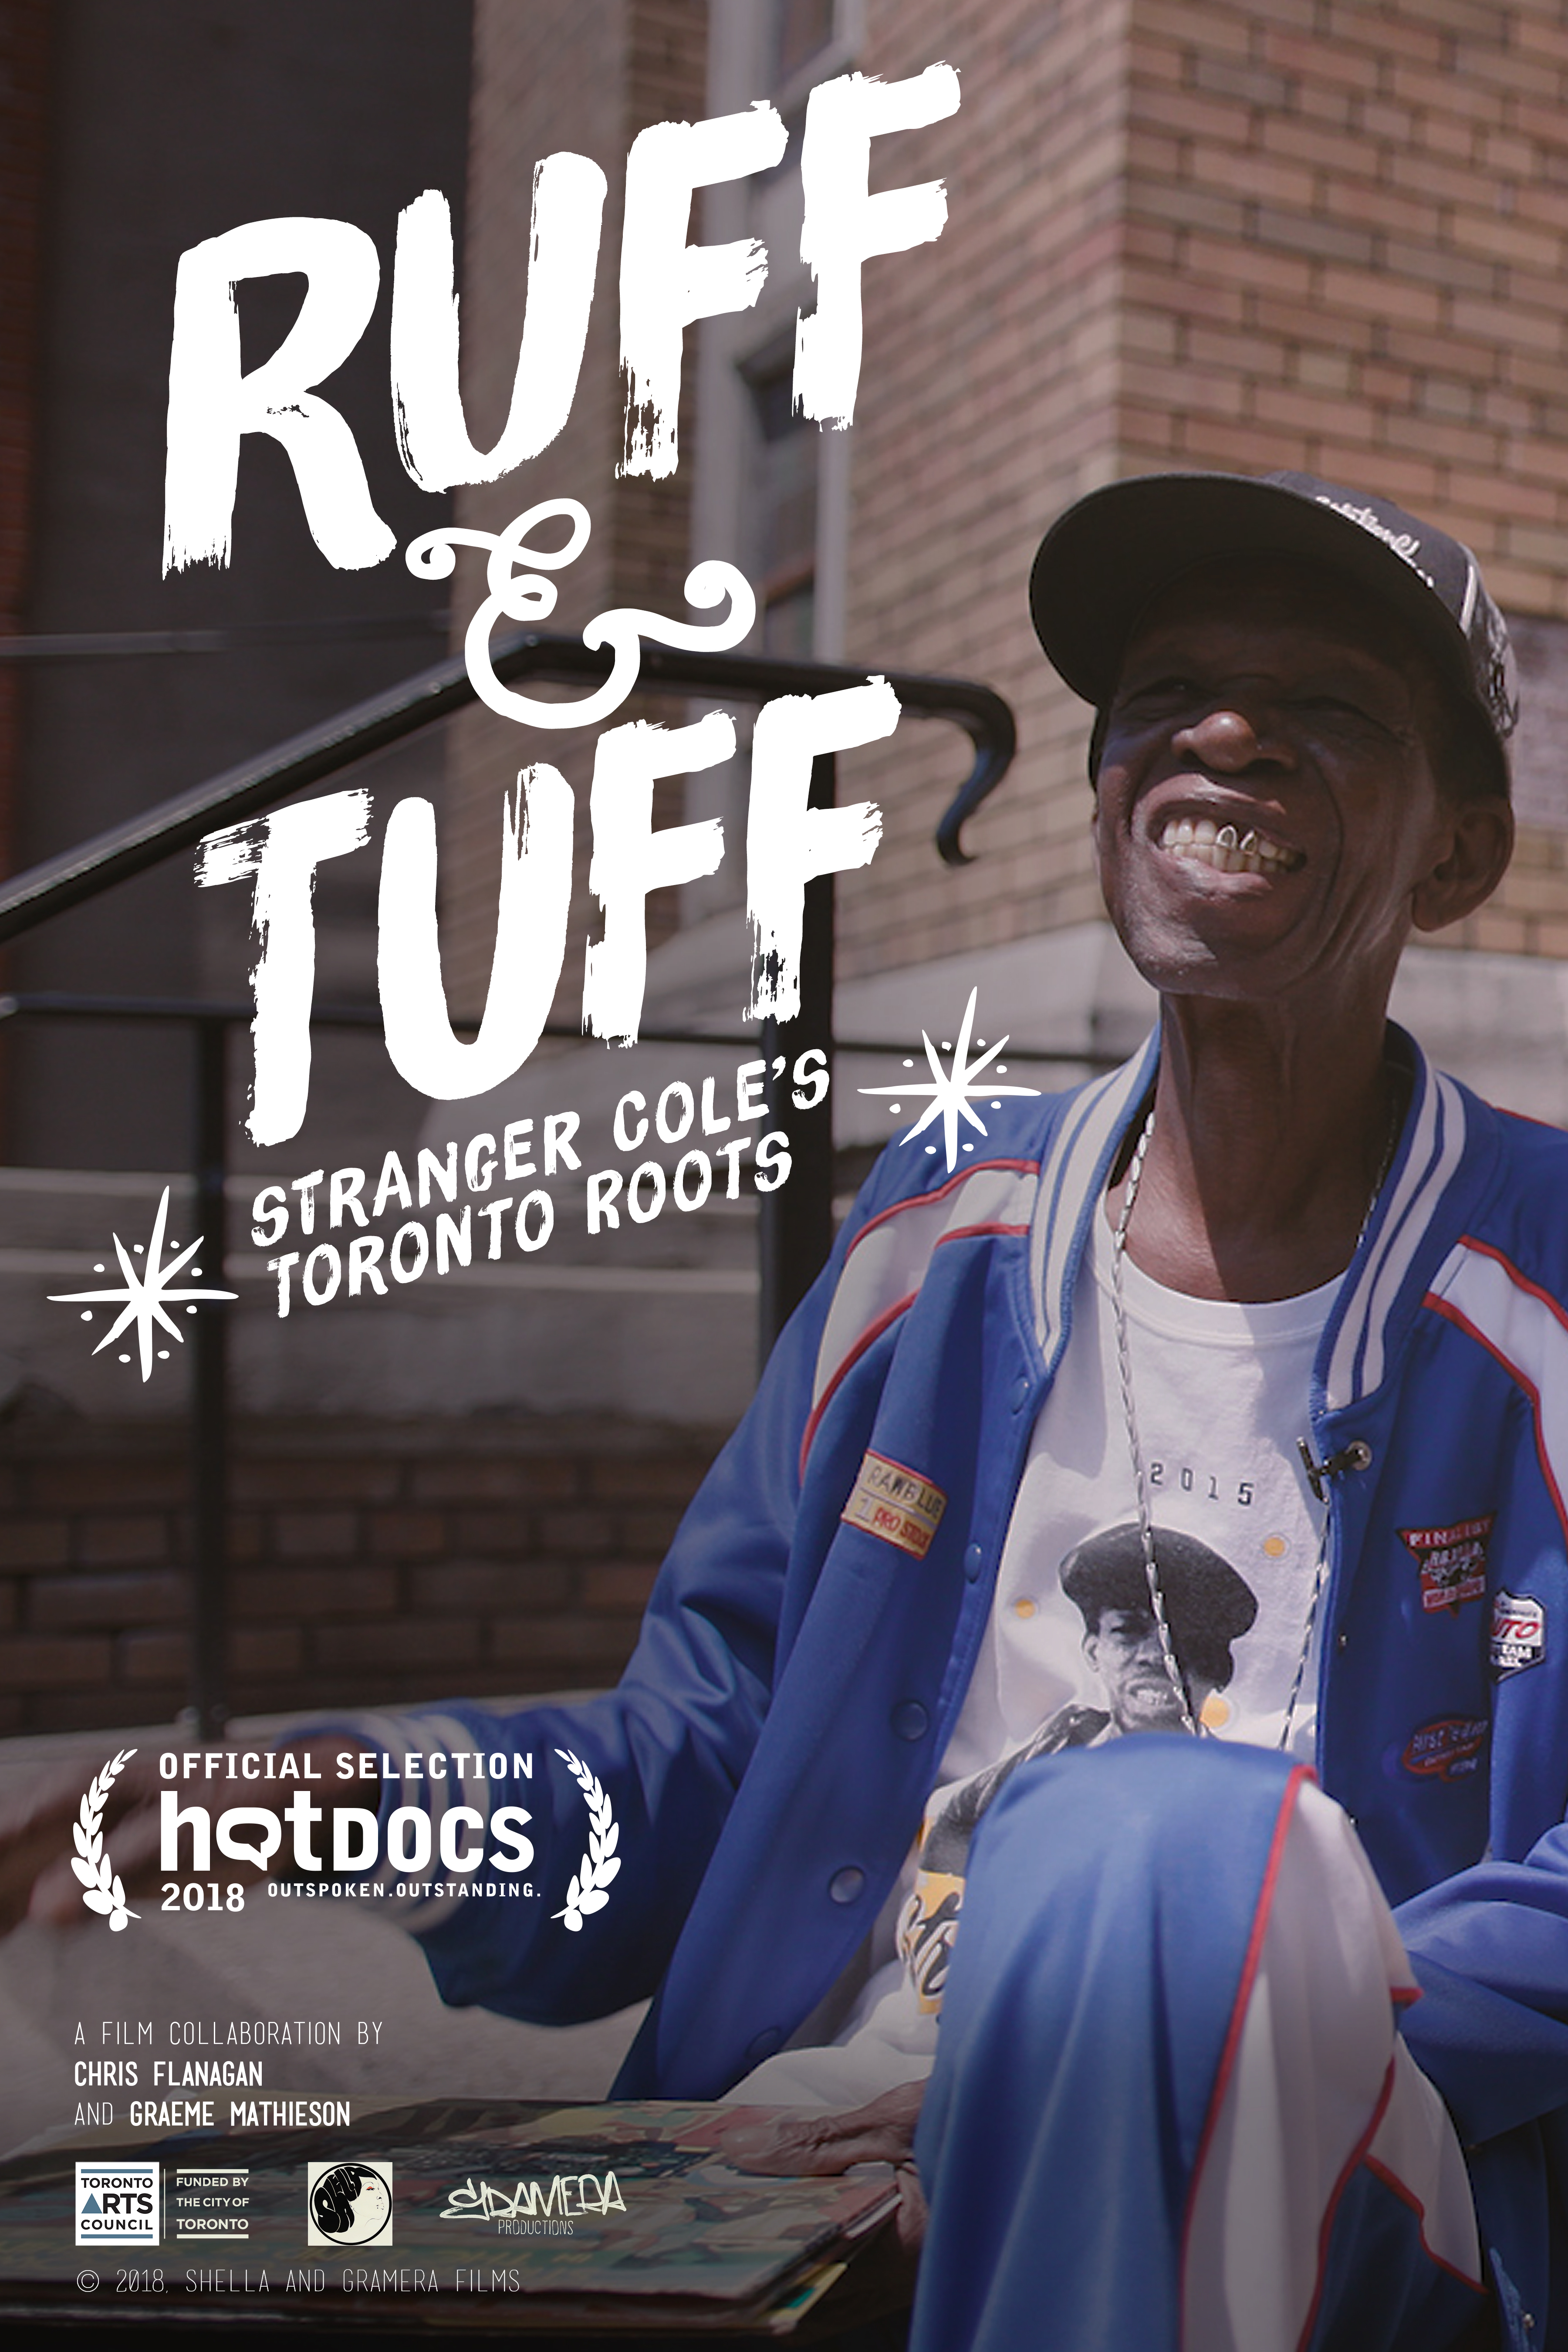 Ruff & Tuff - Stranger Cole's Toronto Roots